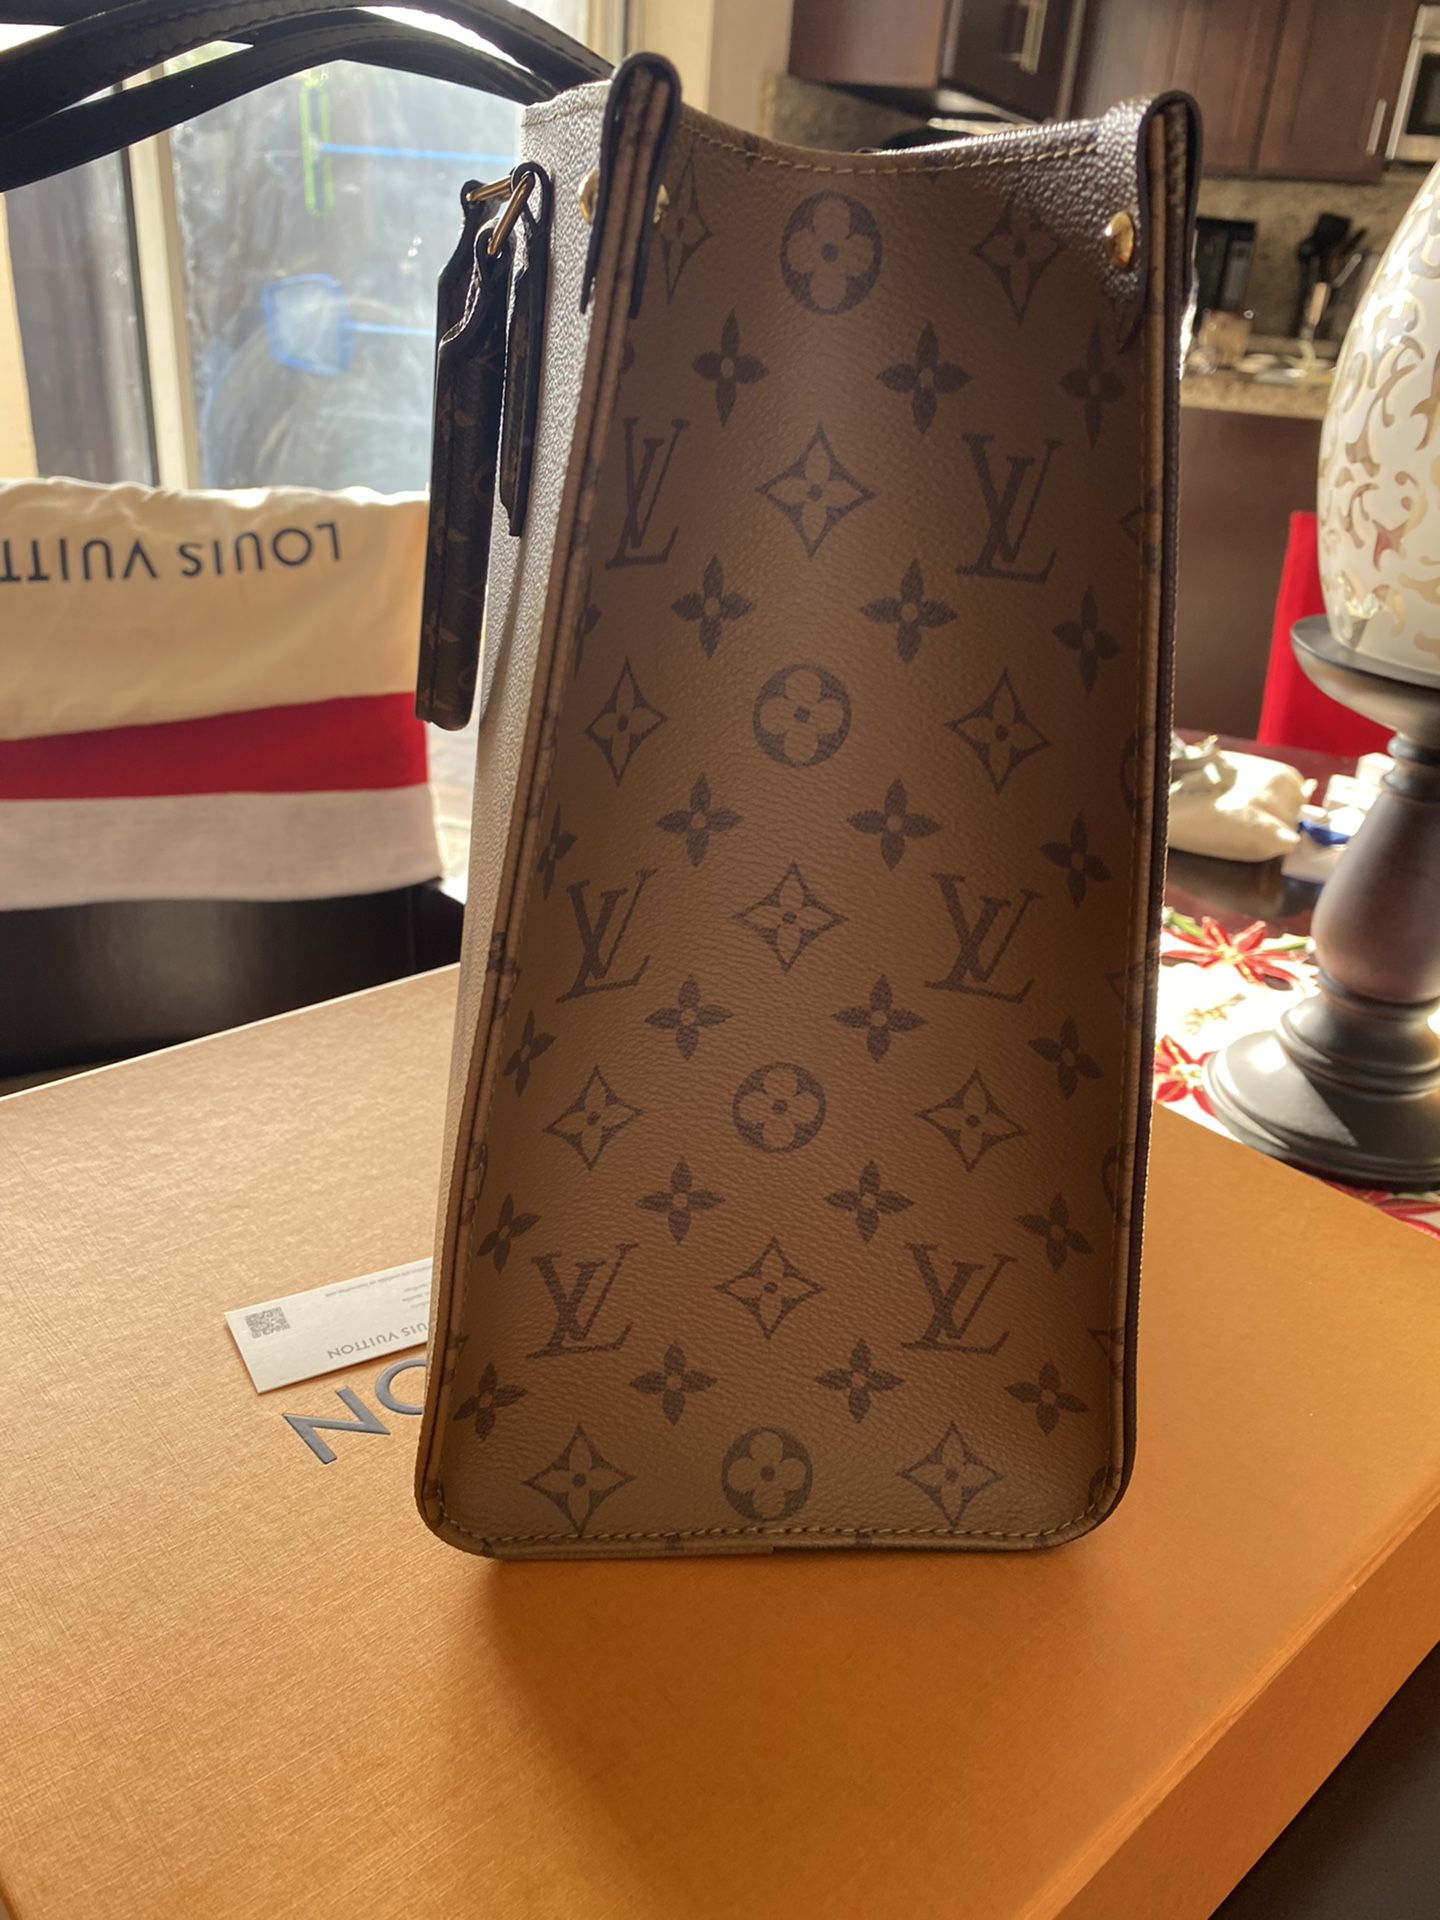 Louis Vuitton handbag model#M41177 for Sale in Runnemede, NJ - OfferUp